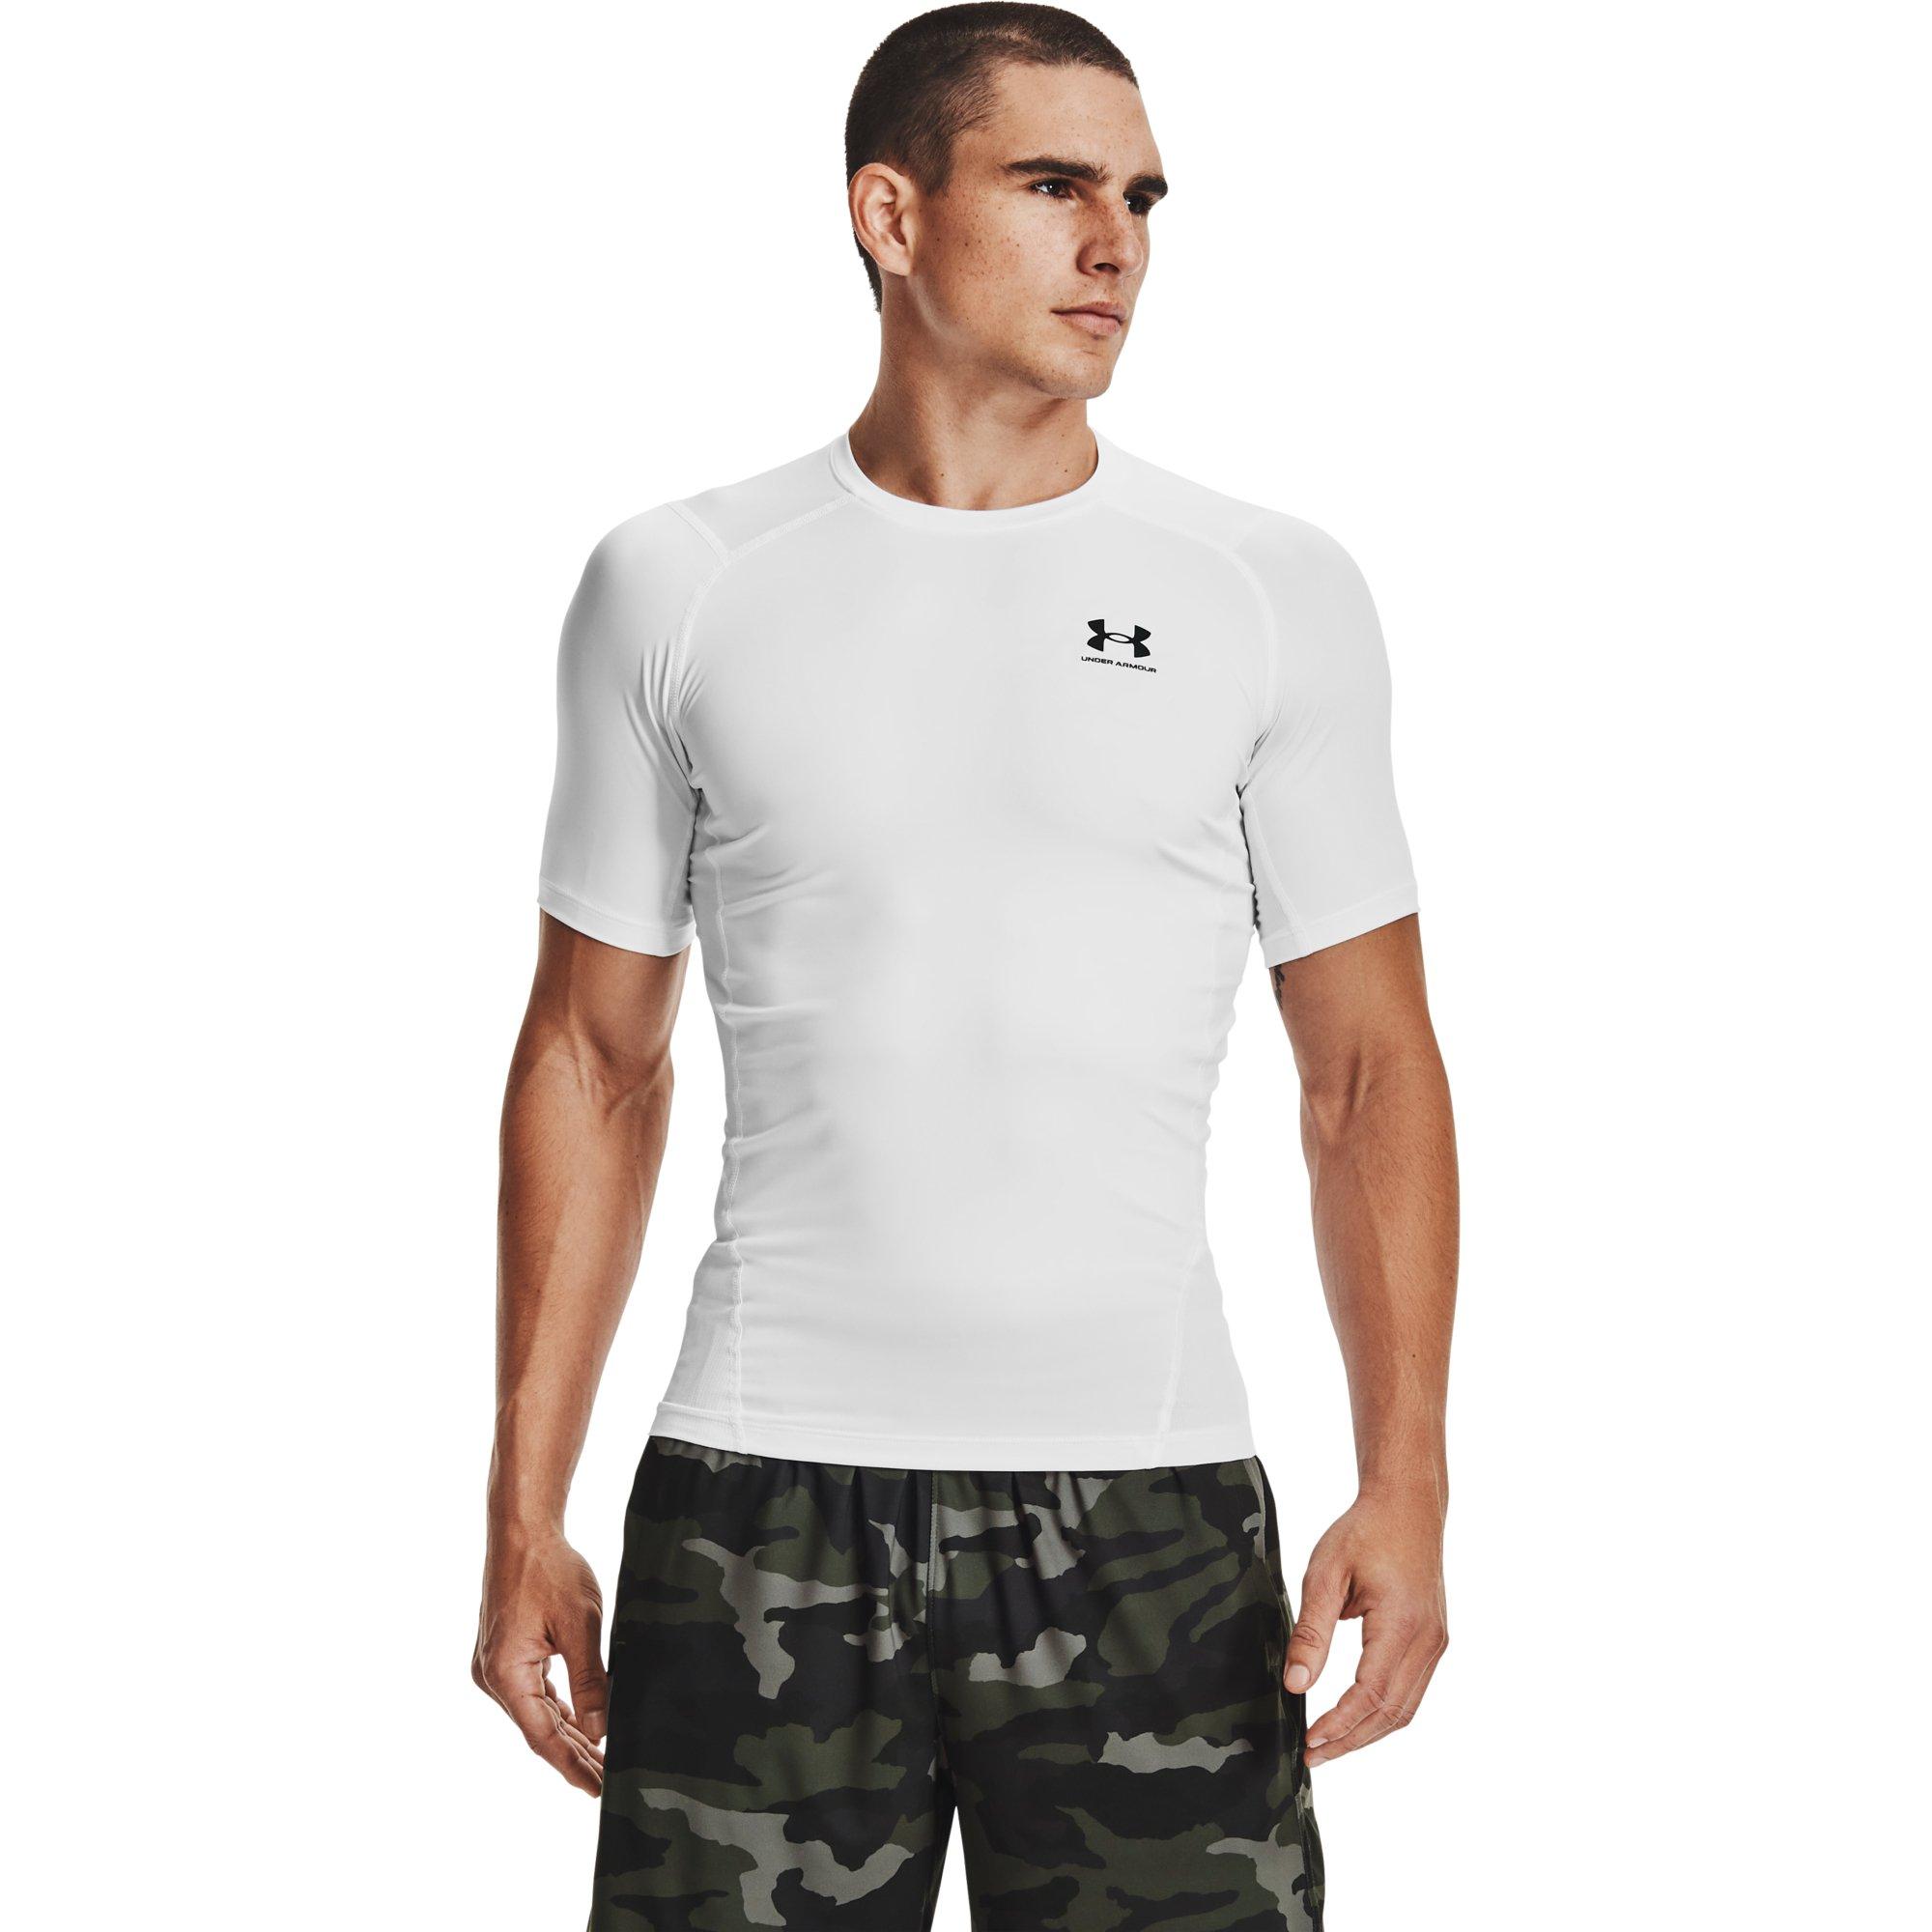 Under Armour Men's HeatGear Compression Shirt